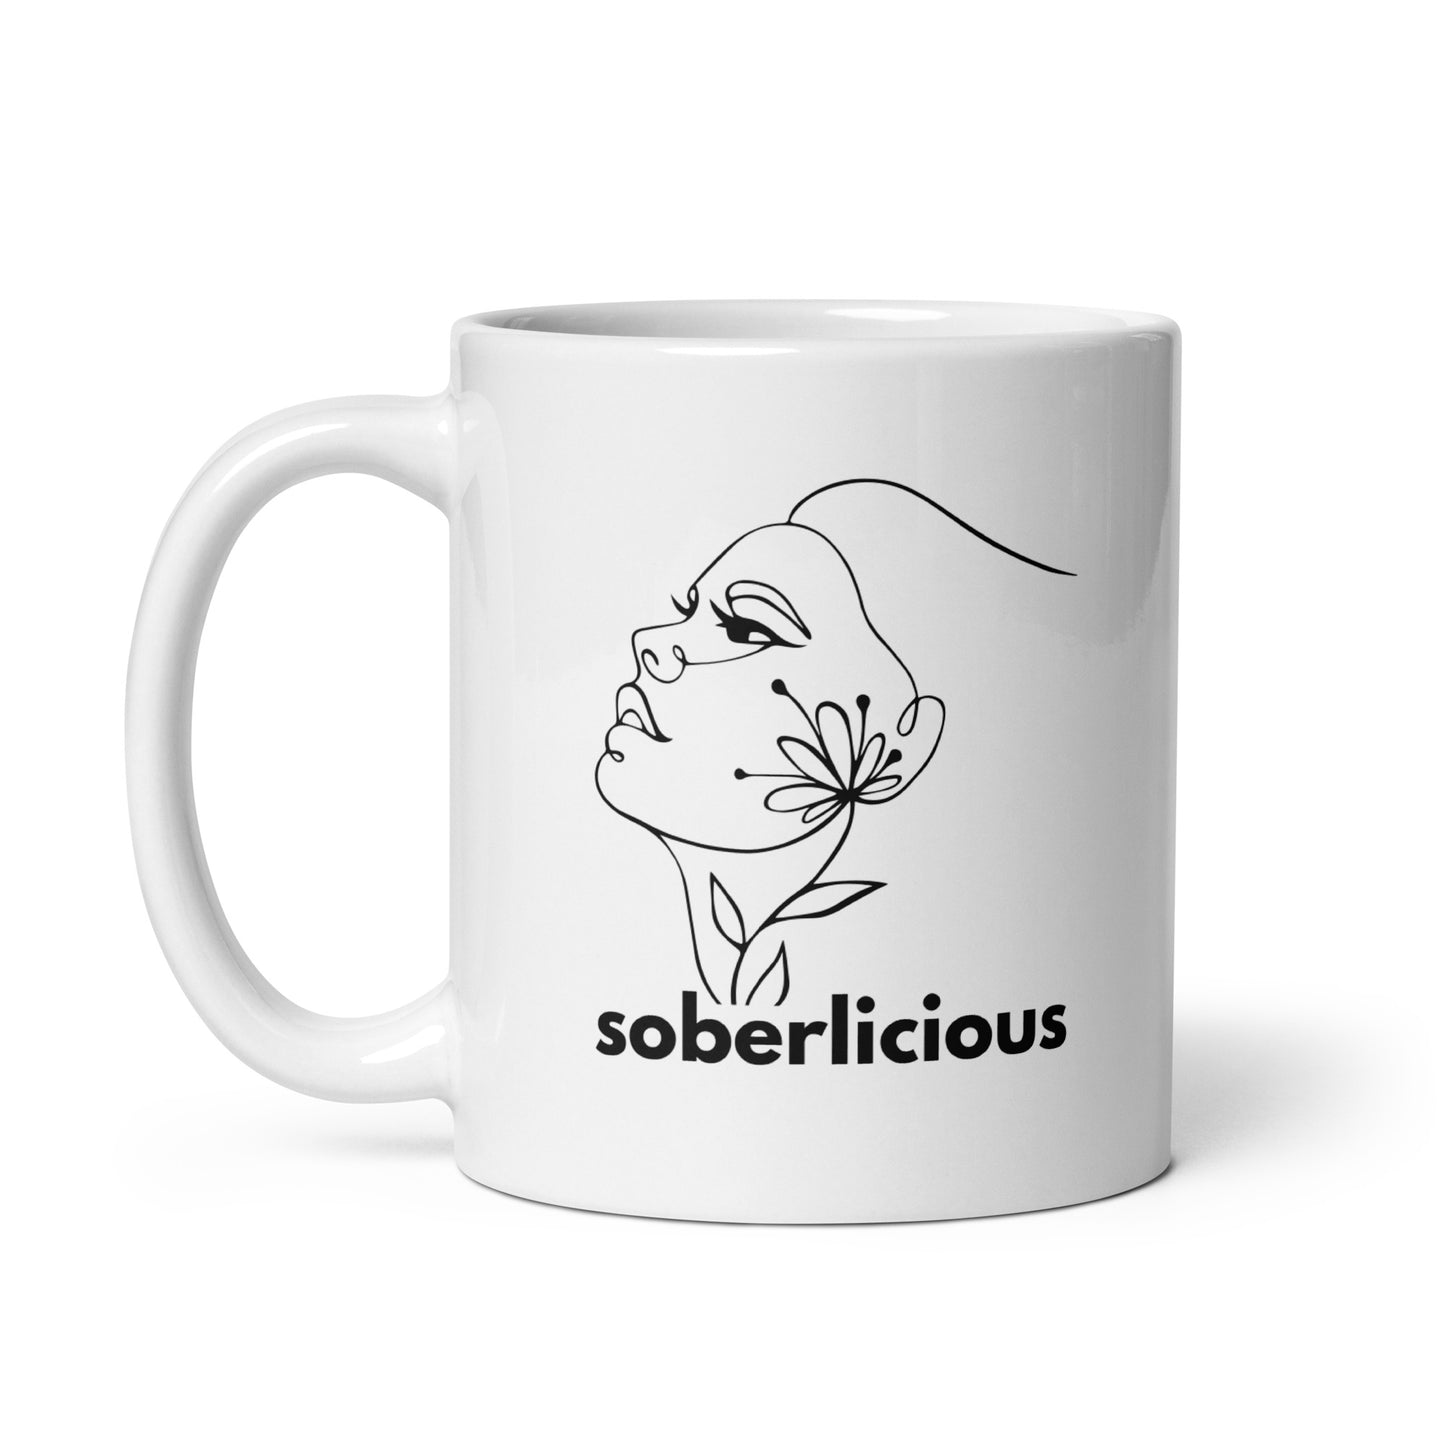 Soberlicious Mug